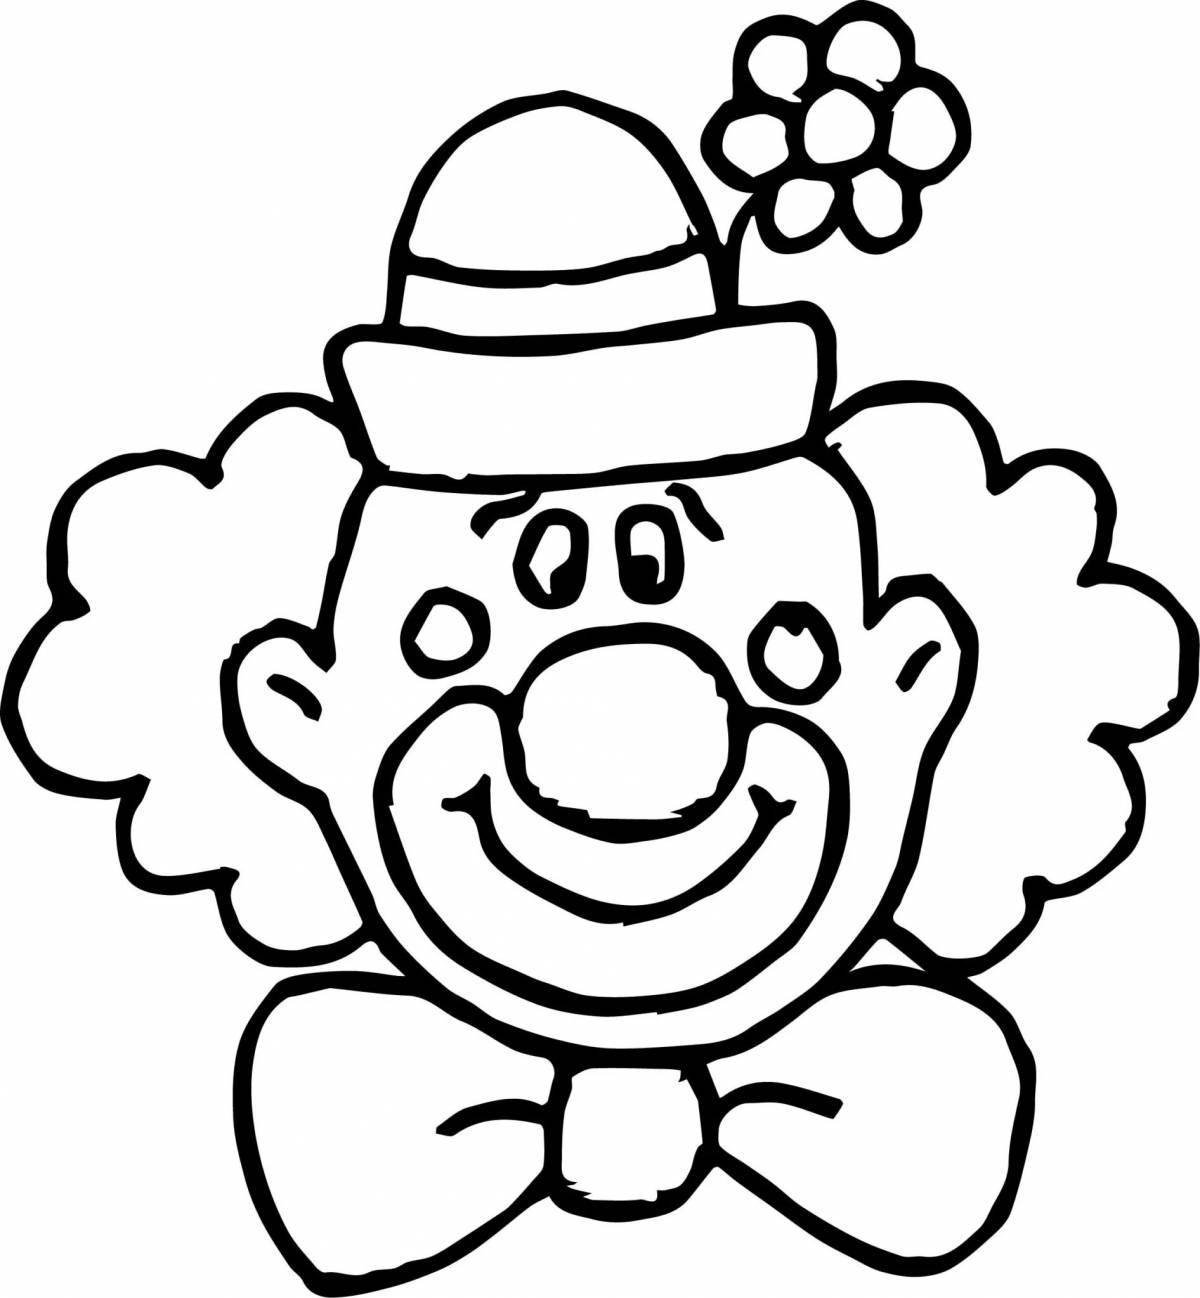 Coloring book magic clown face